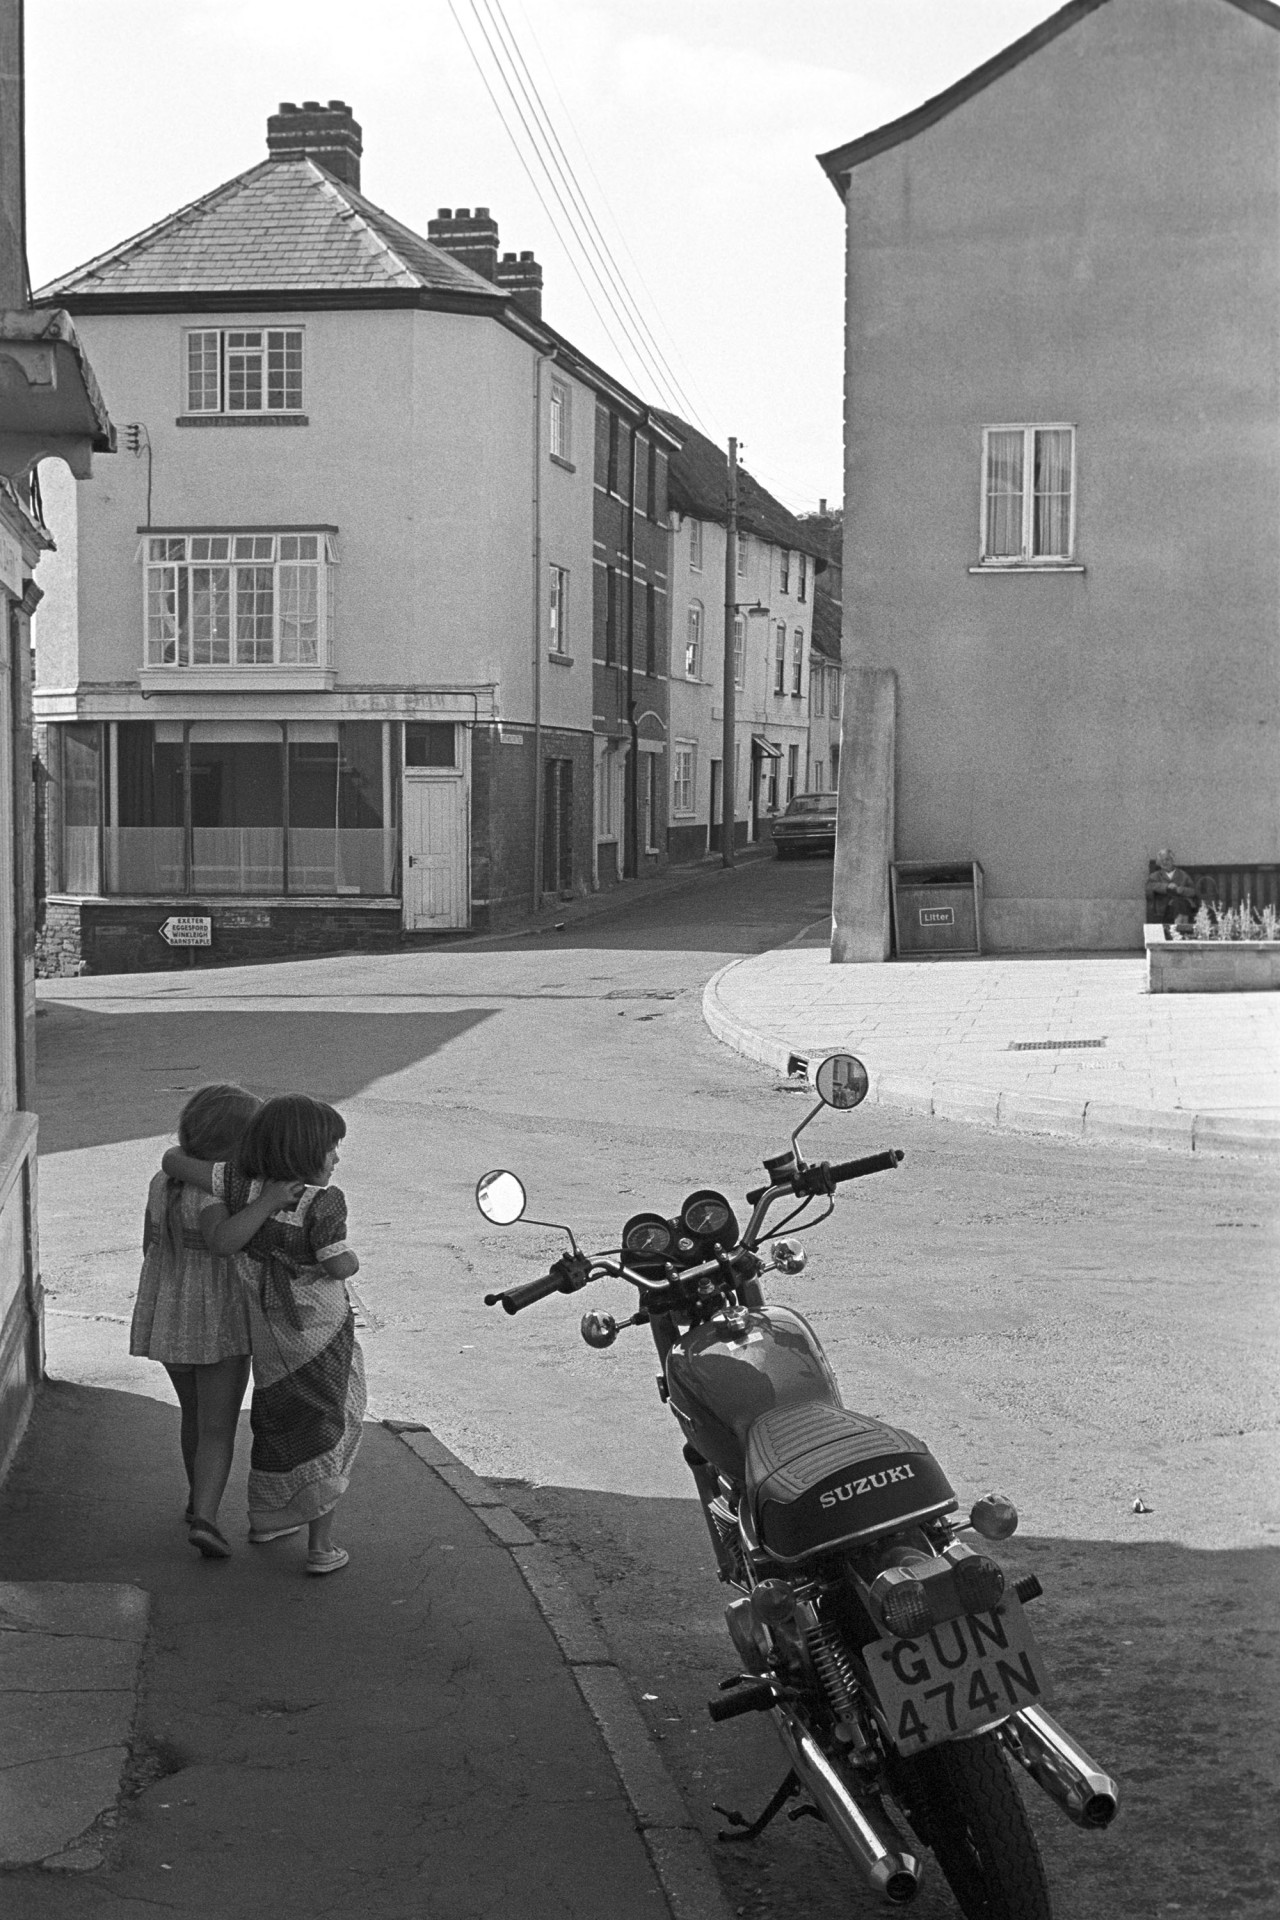 Street scene with children and Motorbike.
[Two children walking past a Suzuki motorbike in Fore Street, Chulmleigh.]